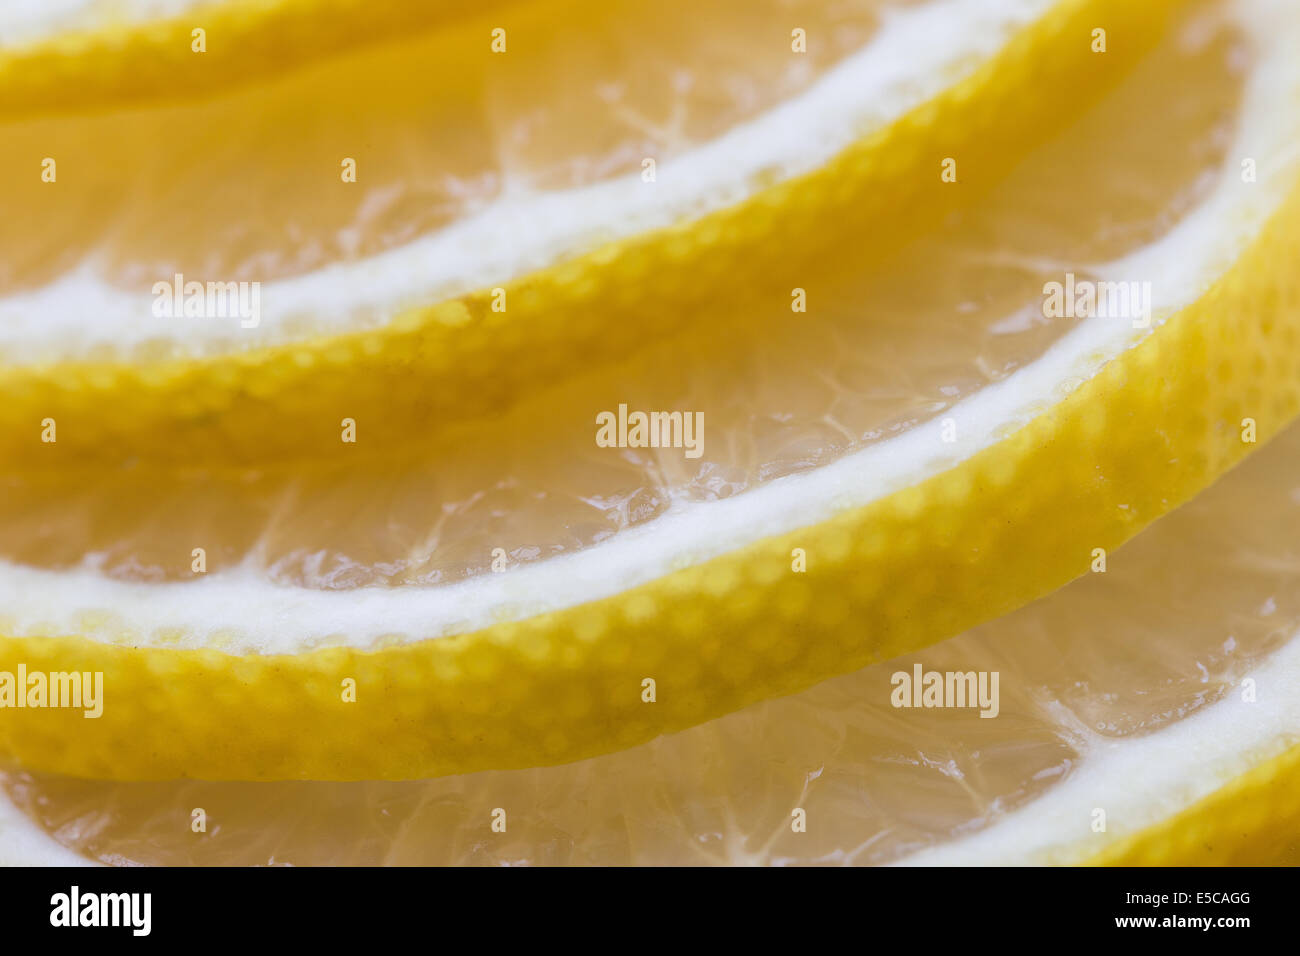 circle sliced fresh lemon in stratum form Stock Photo